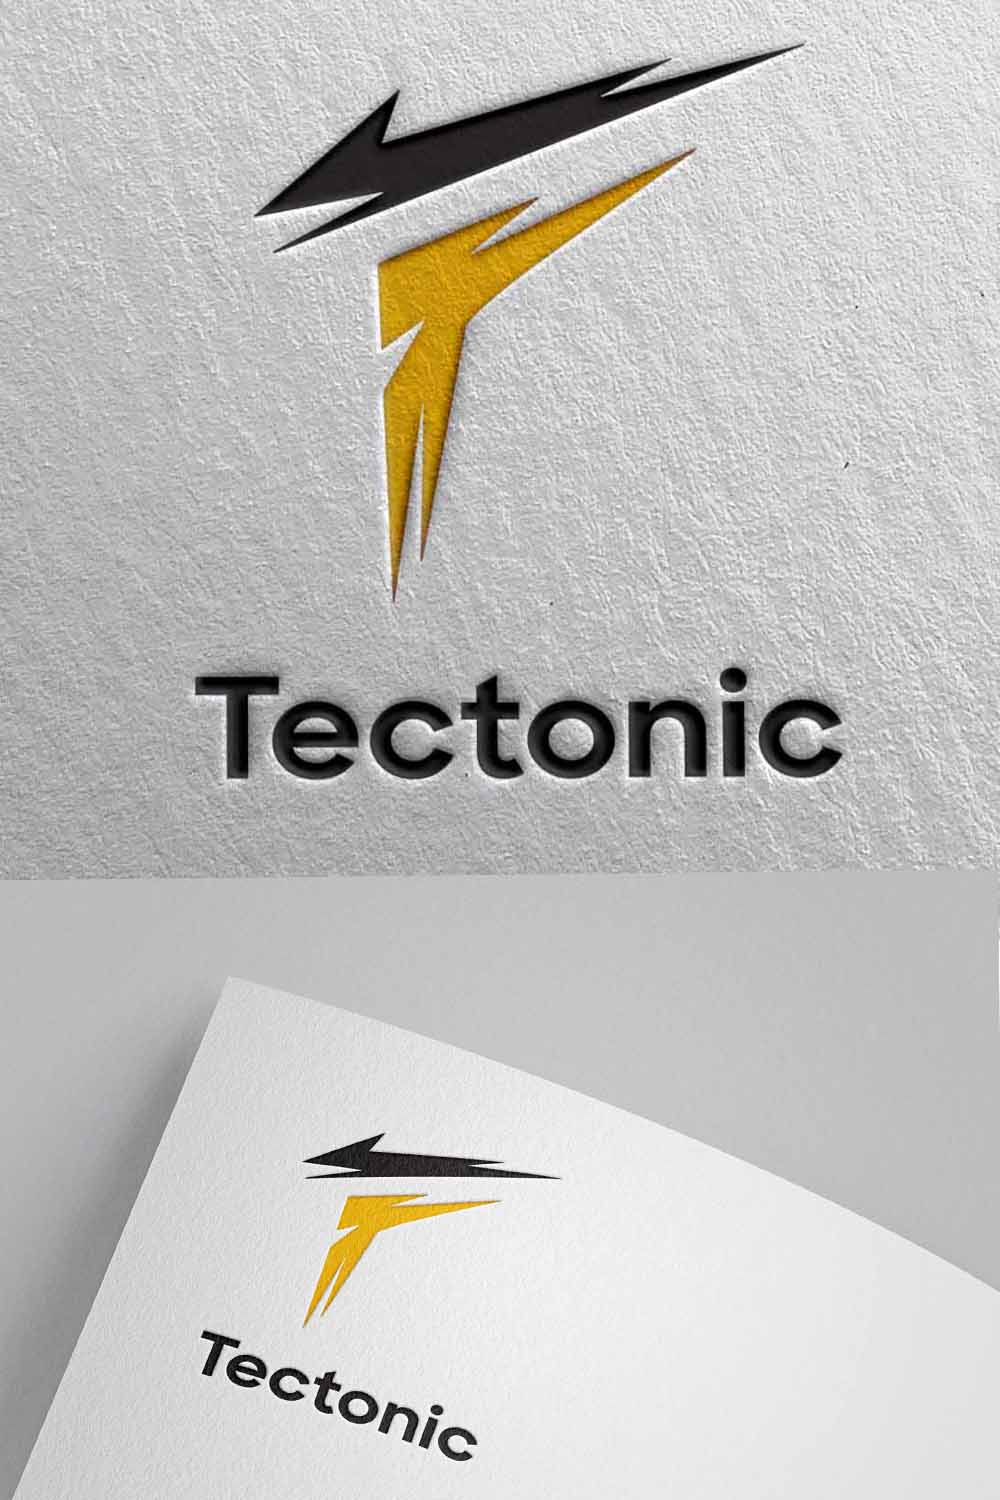 Modern Tectonic Logo Design Template pinterest preview image.